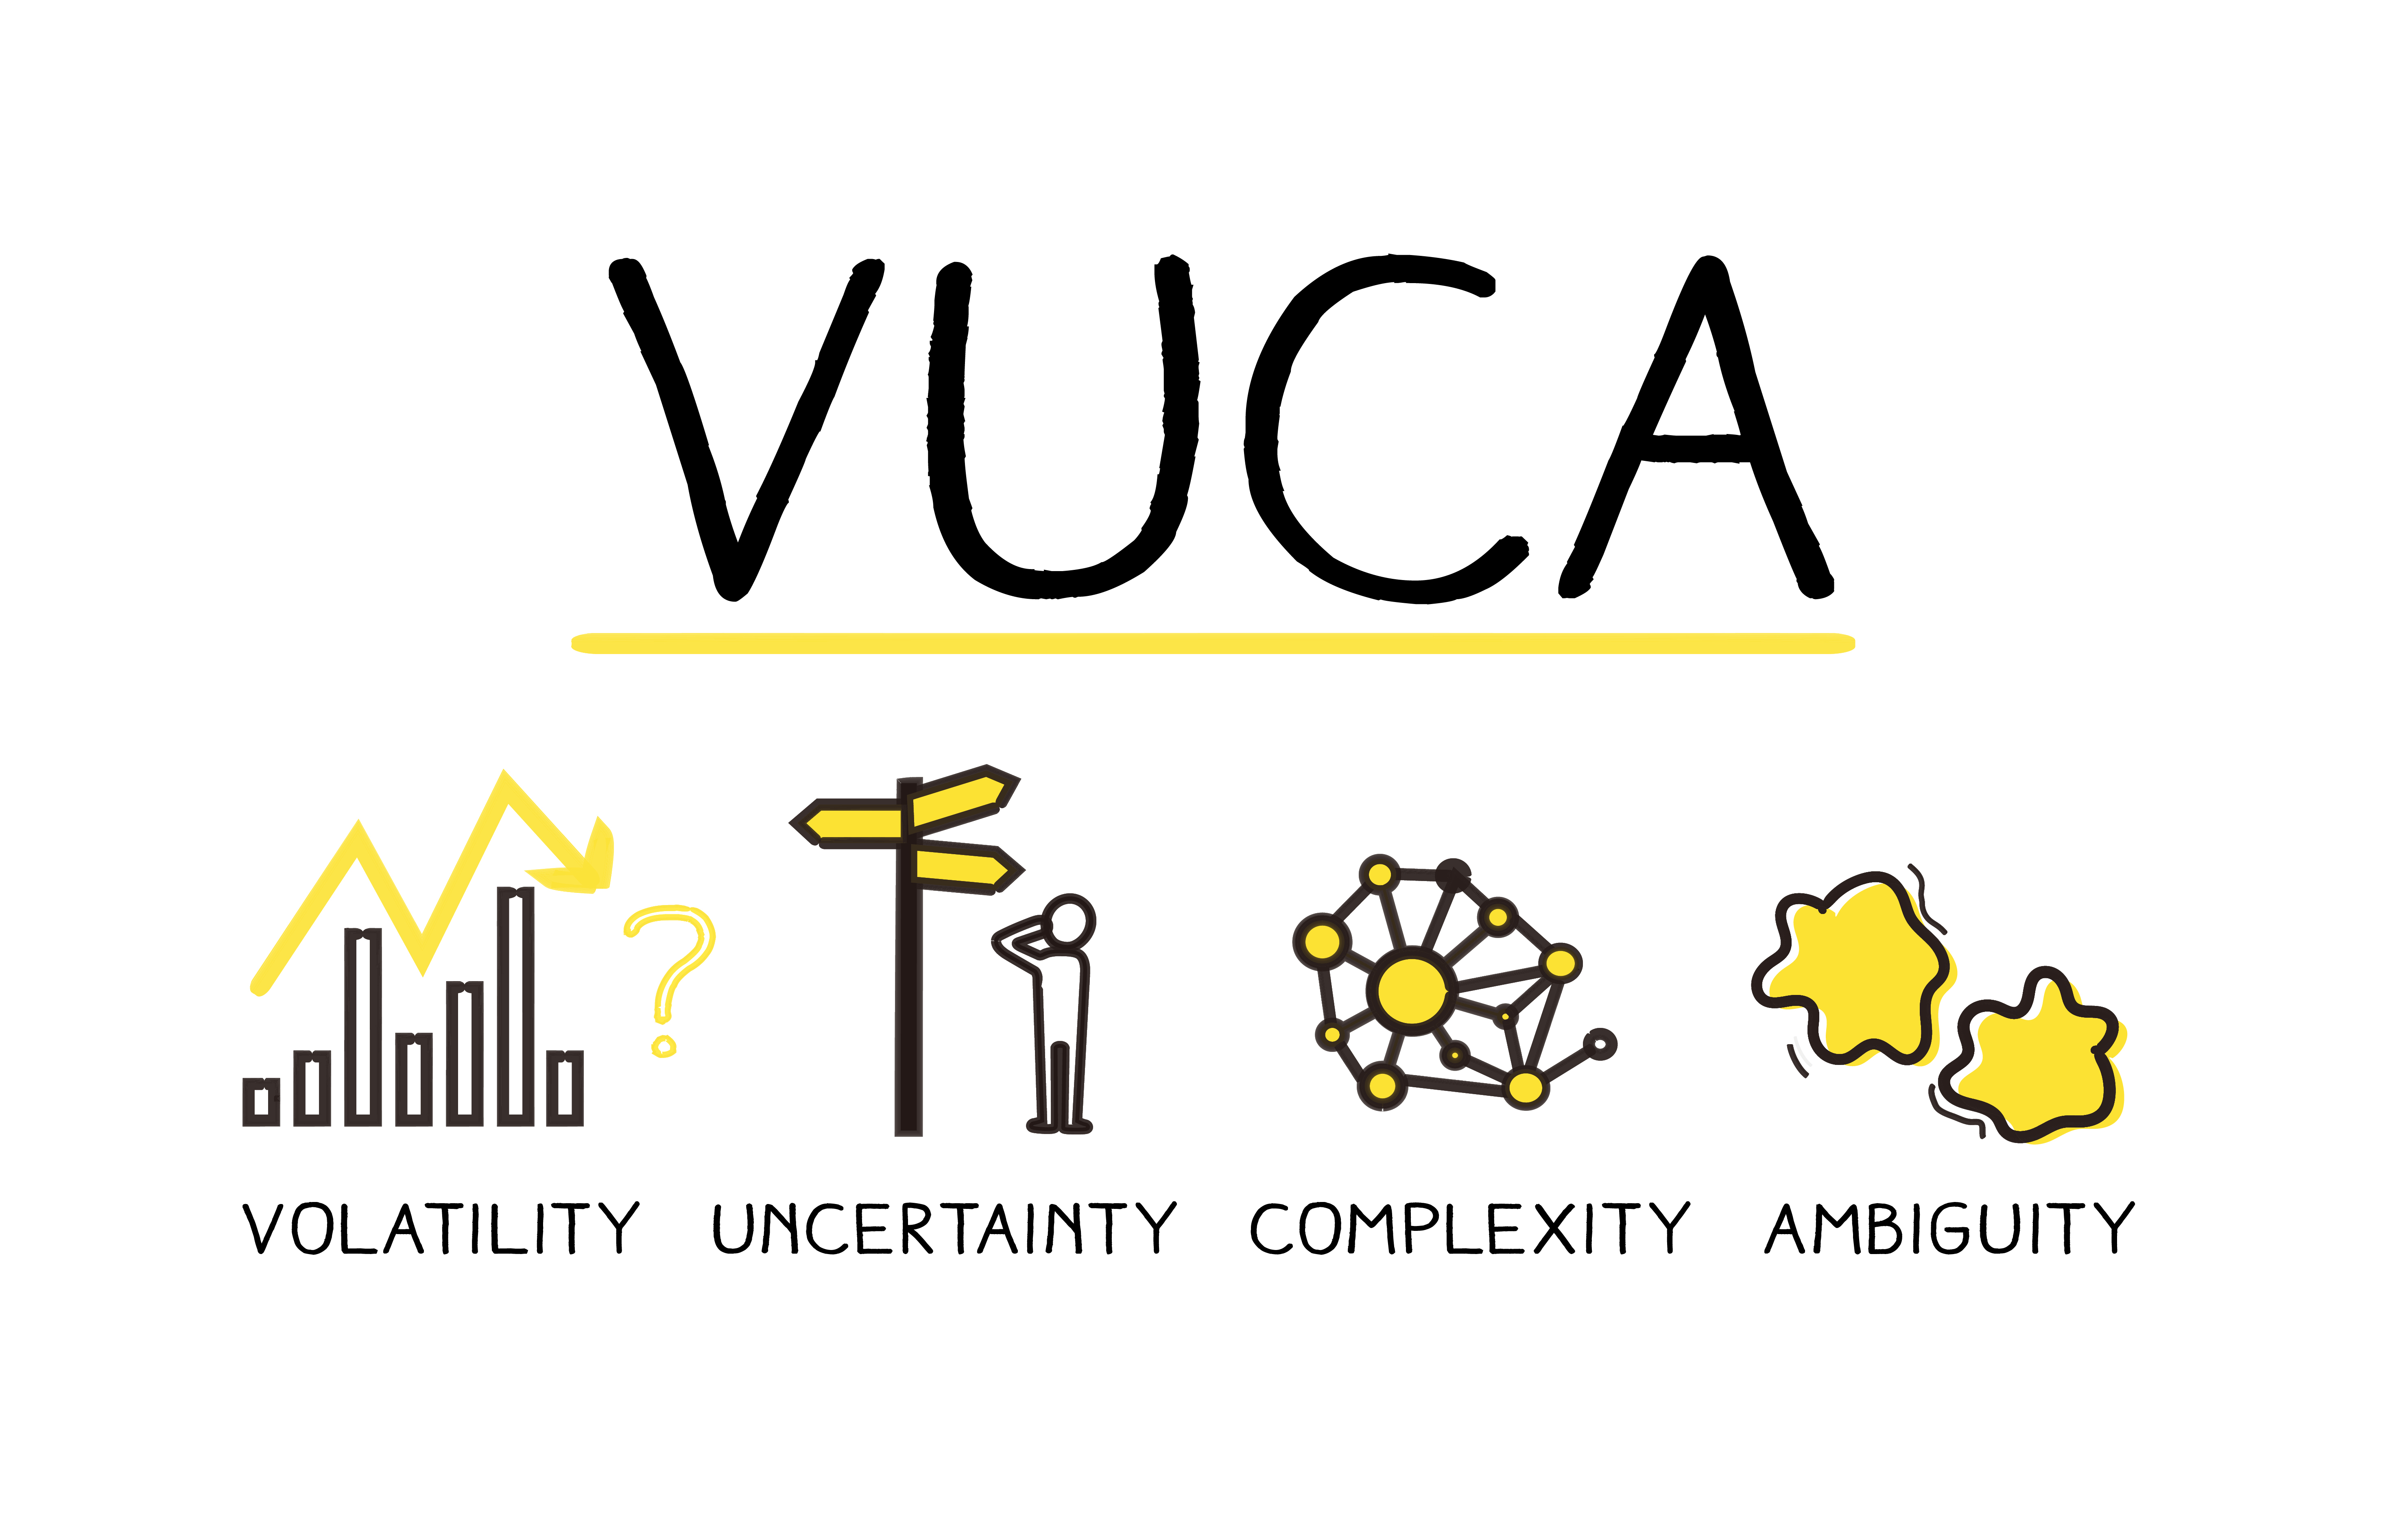 Vuca acronym: volatility, uncertainty, complexity, ambiguity